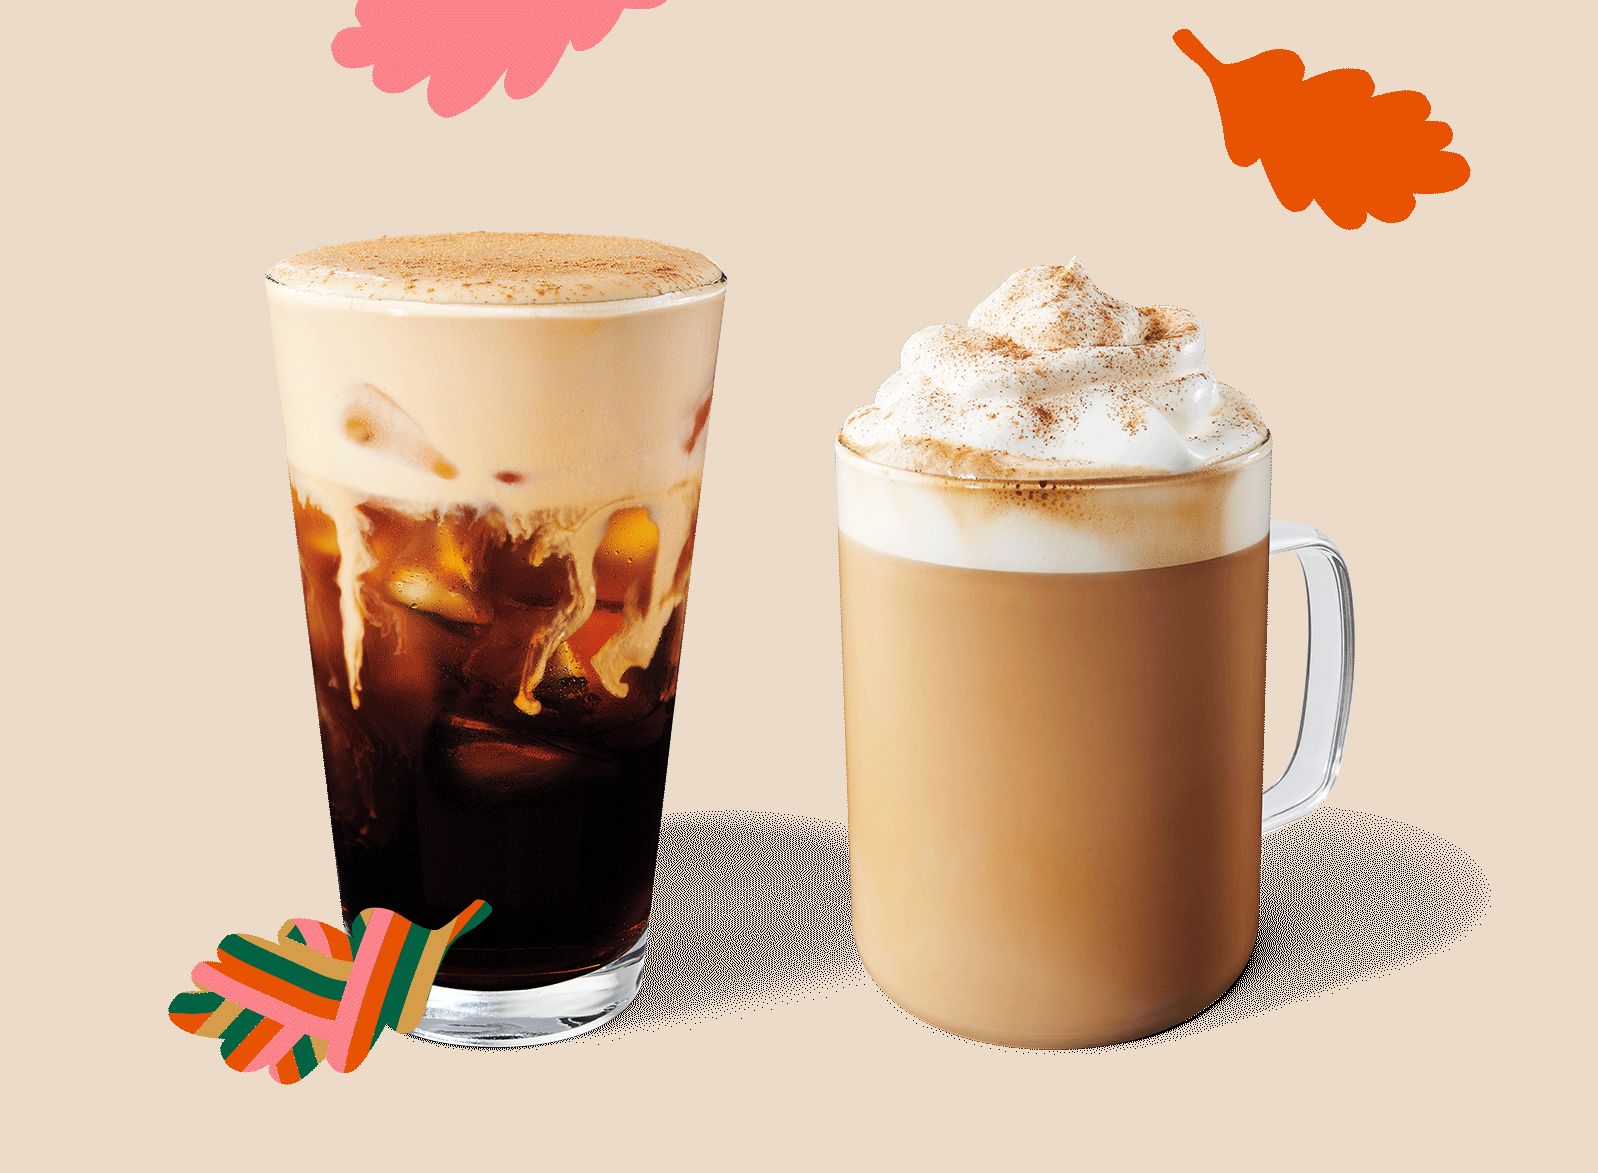 Popular Pumpkin Spice Drinks are Back at Starbucks this Fall Season